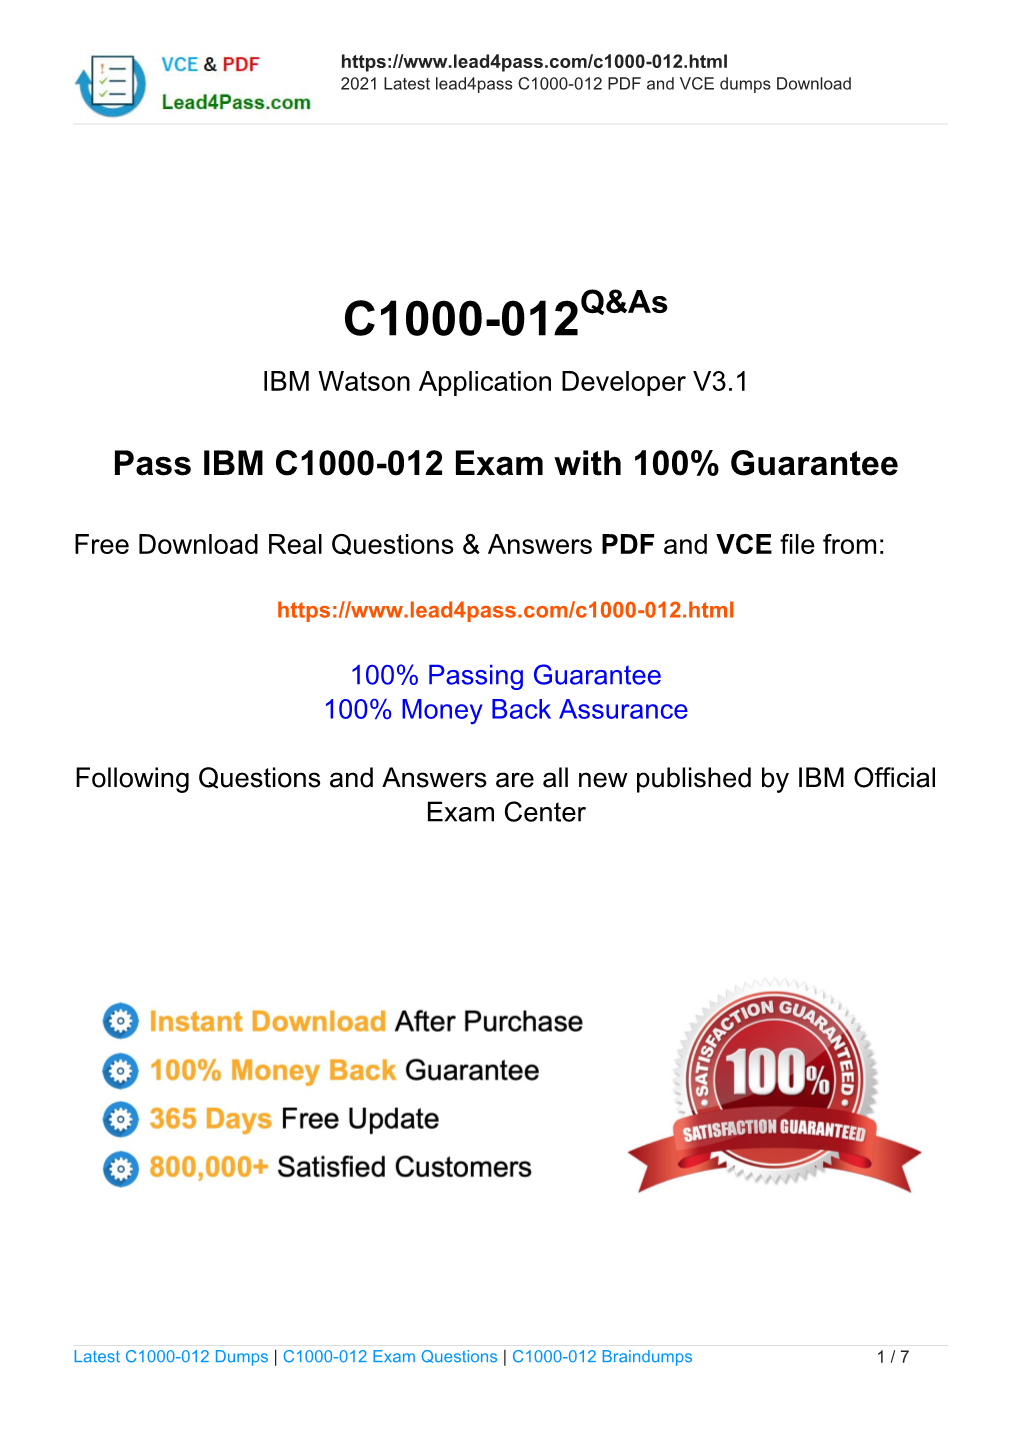 C1000-012.Html 2021 Latest Lead4pass C1000-012 PDF and VCE Dumps Download